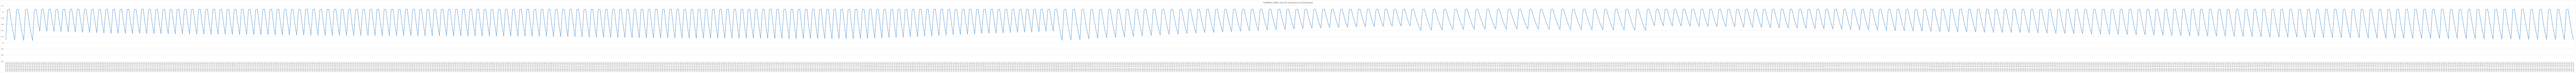 Zone Air Temperature-1 min. Timestep